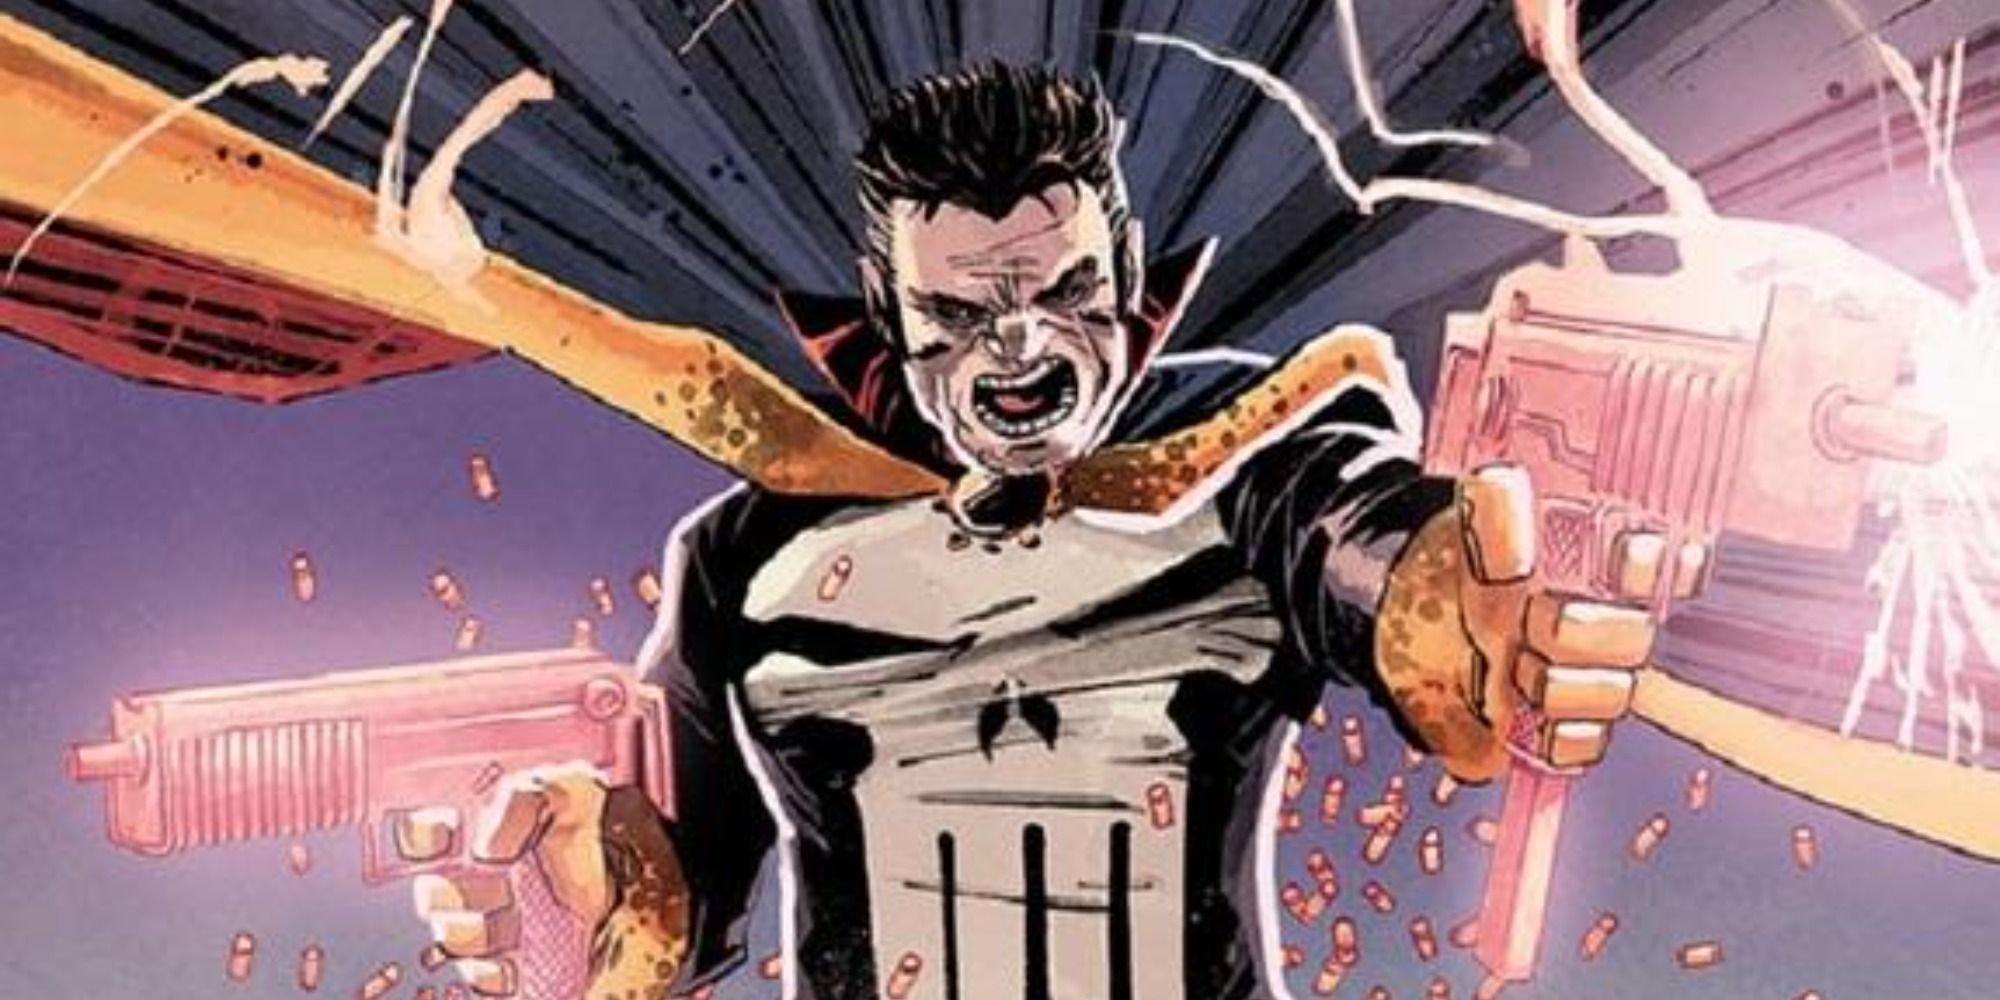 Punisher Strange uses his powers in Marvel Comics.